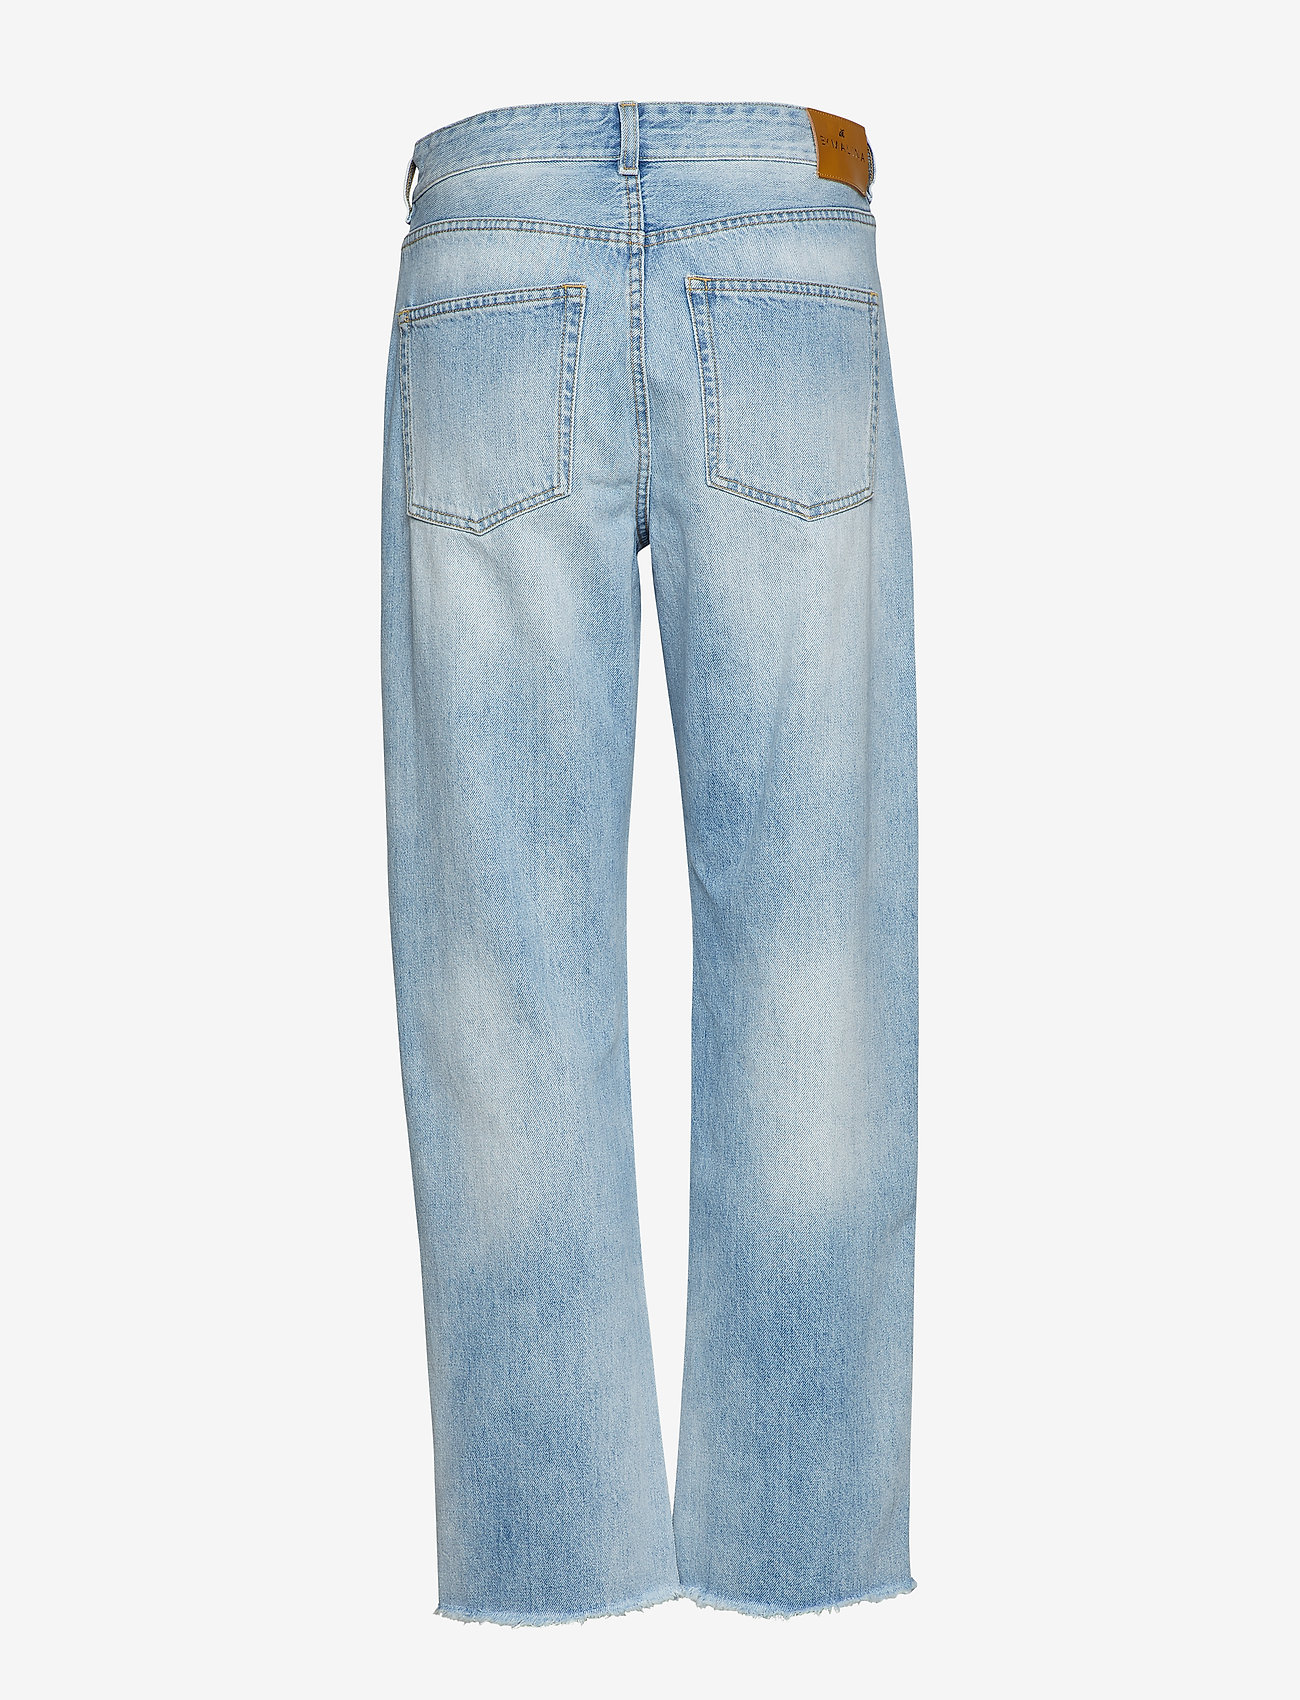 Malina - Alexa high-rise denim jeans - raka jeans - light blue wash - 1